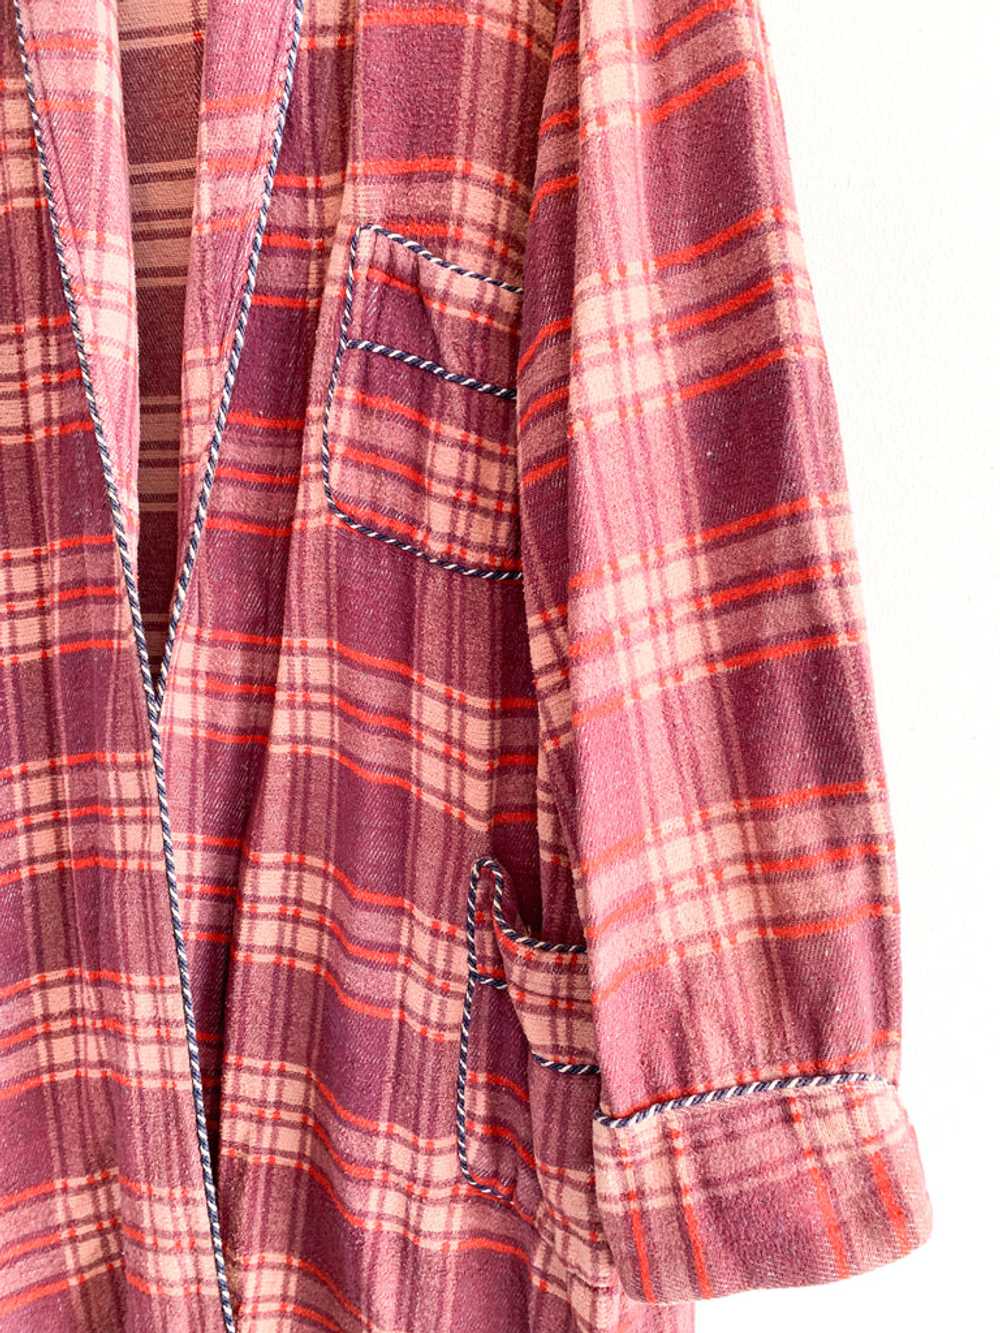 1940's Beacon Plaid Robe/Duster - image 4